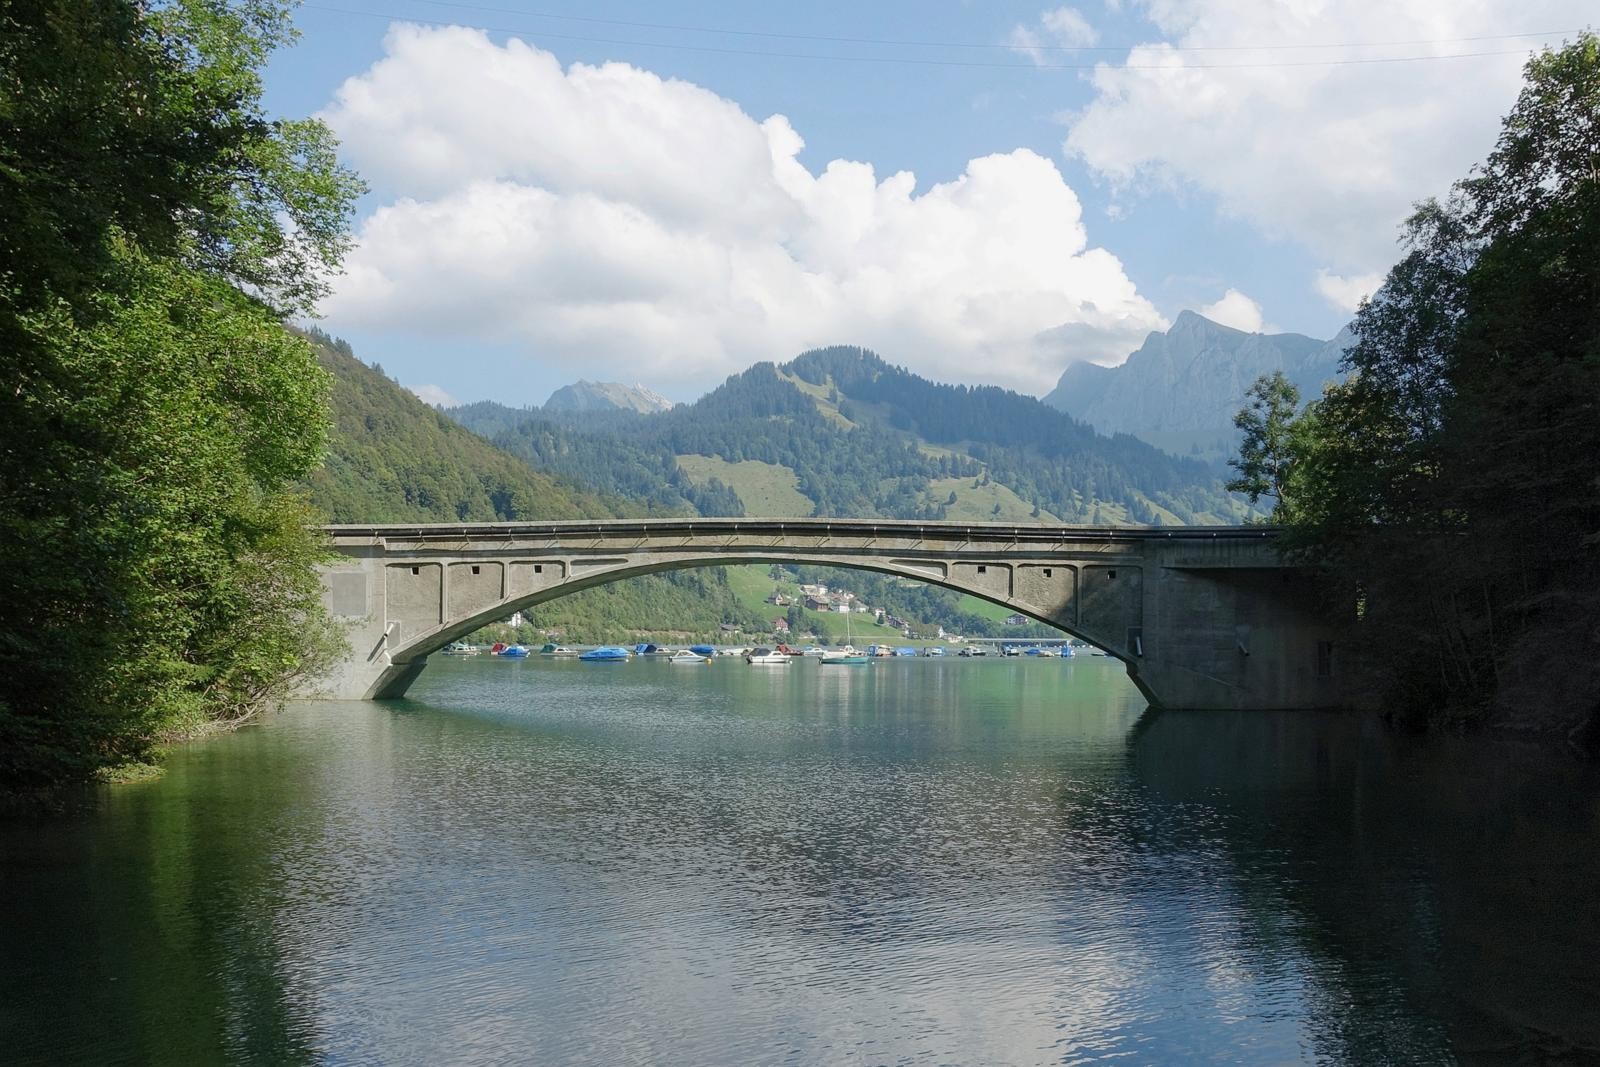 Schrähbachbrücke